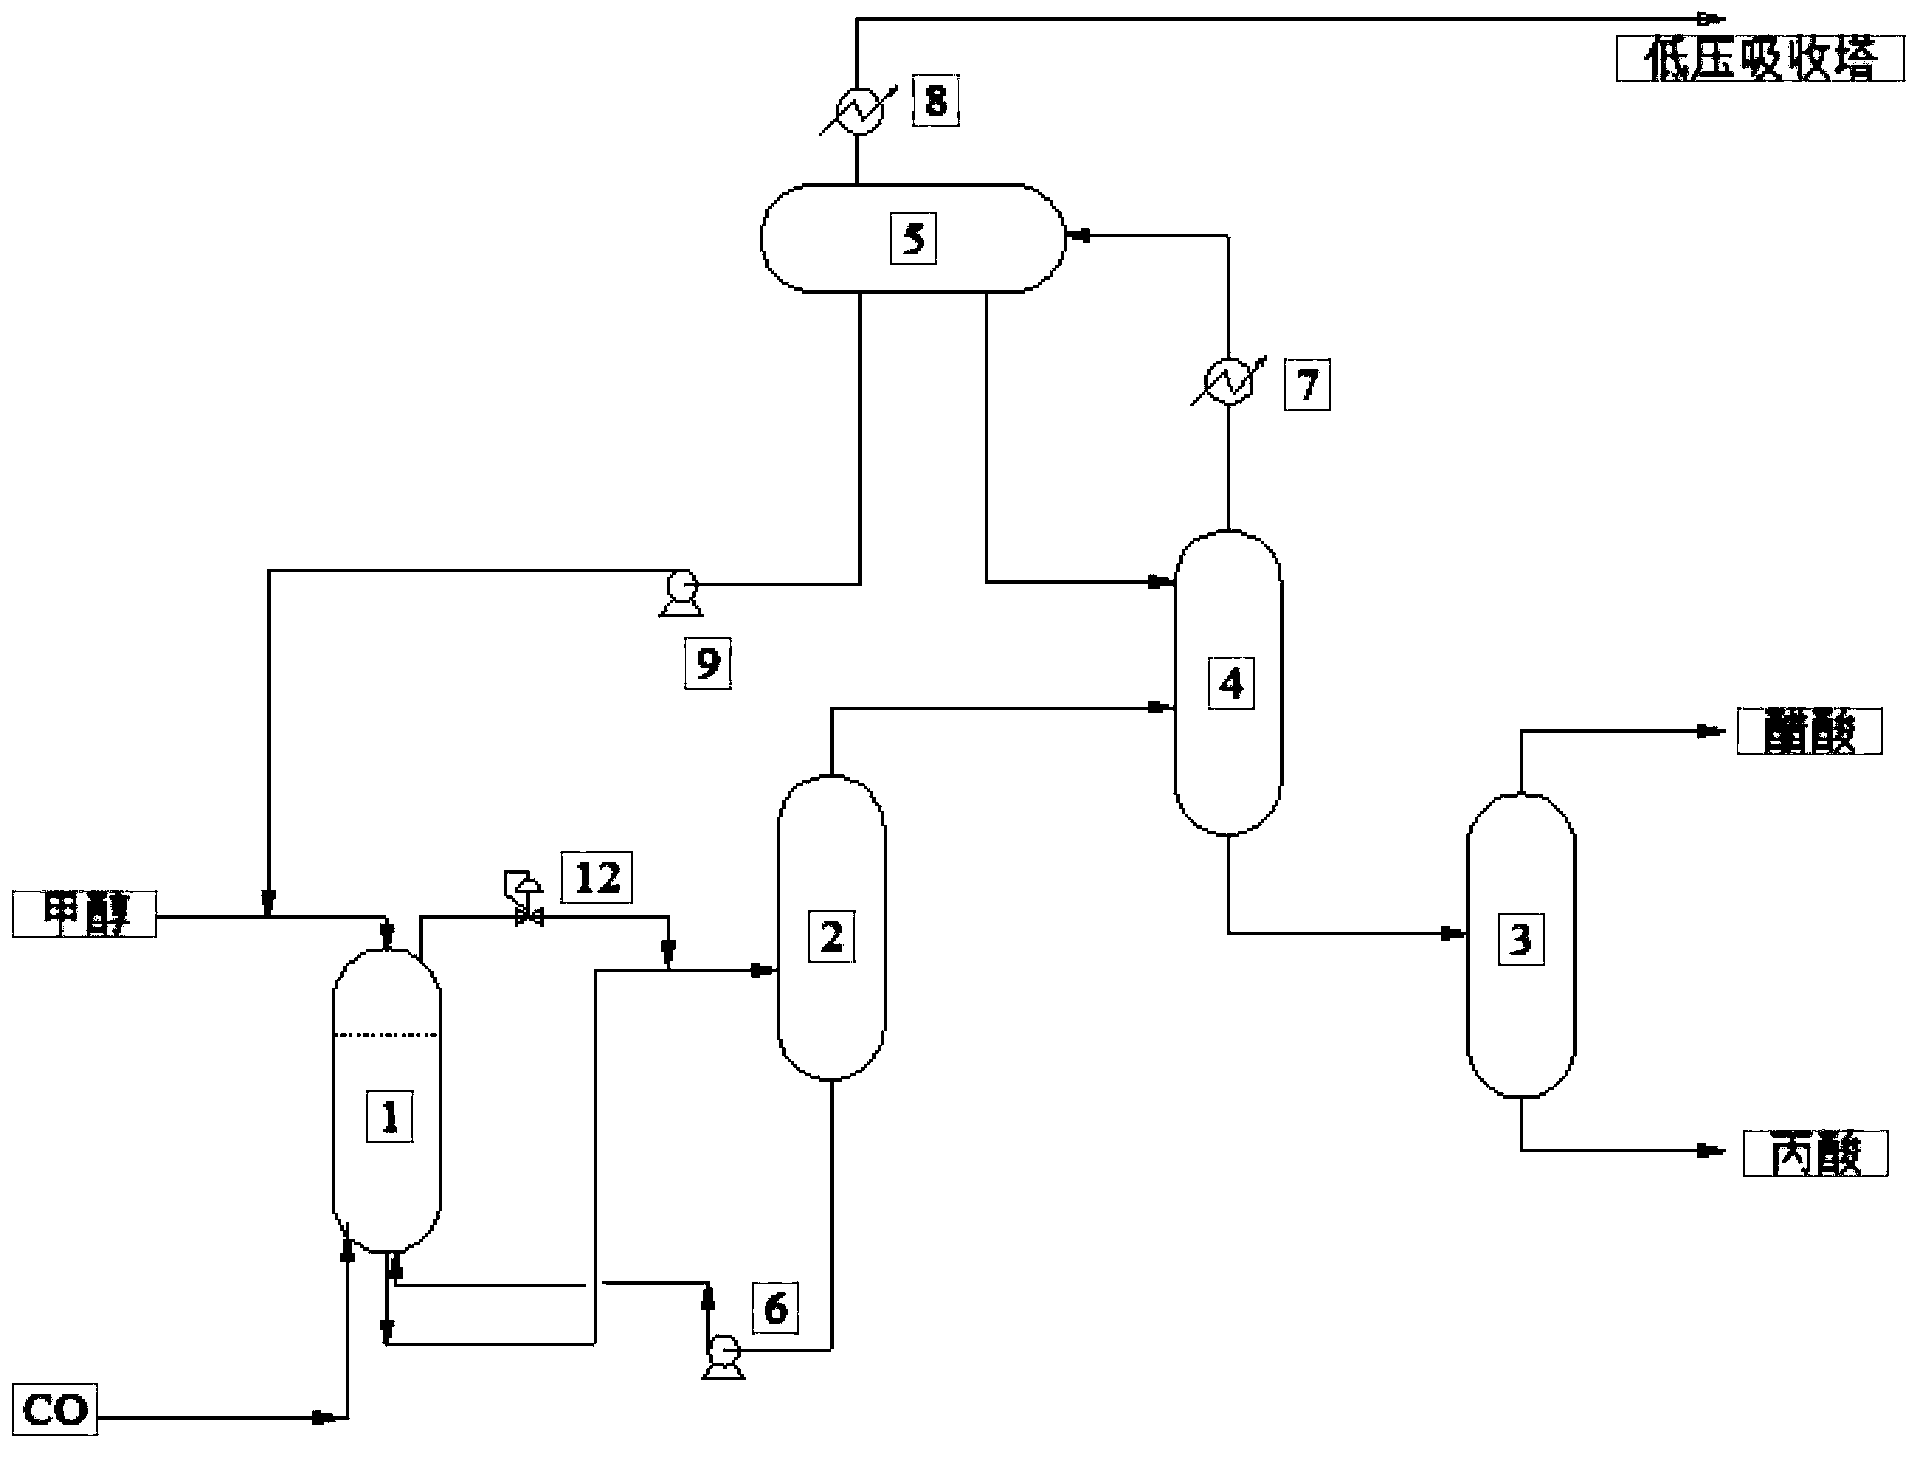 Production method for preparing acetic acid through carbonylation of methanol